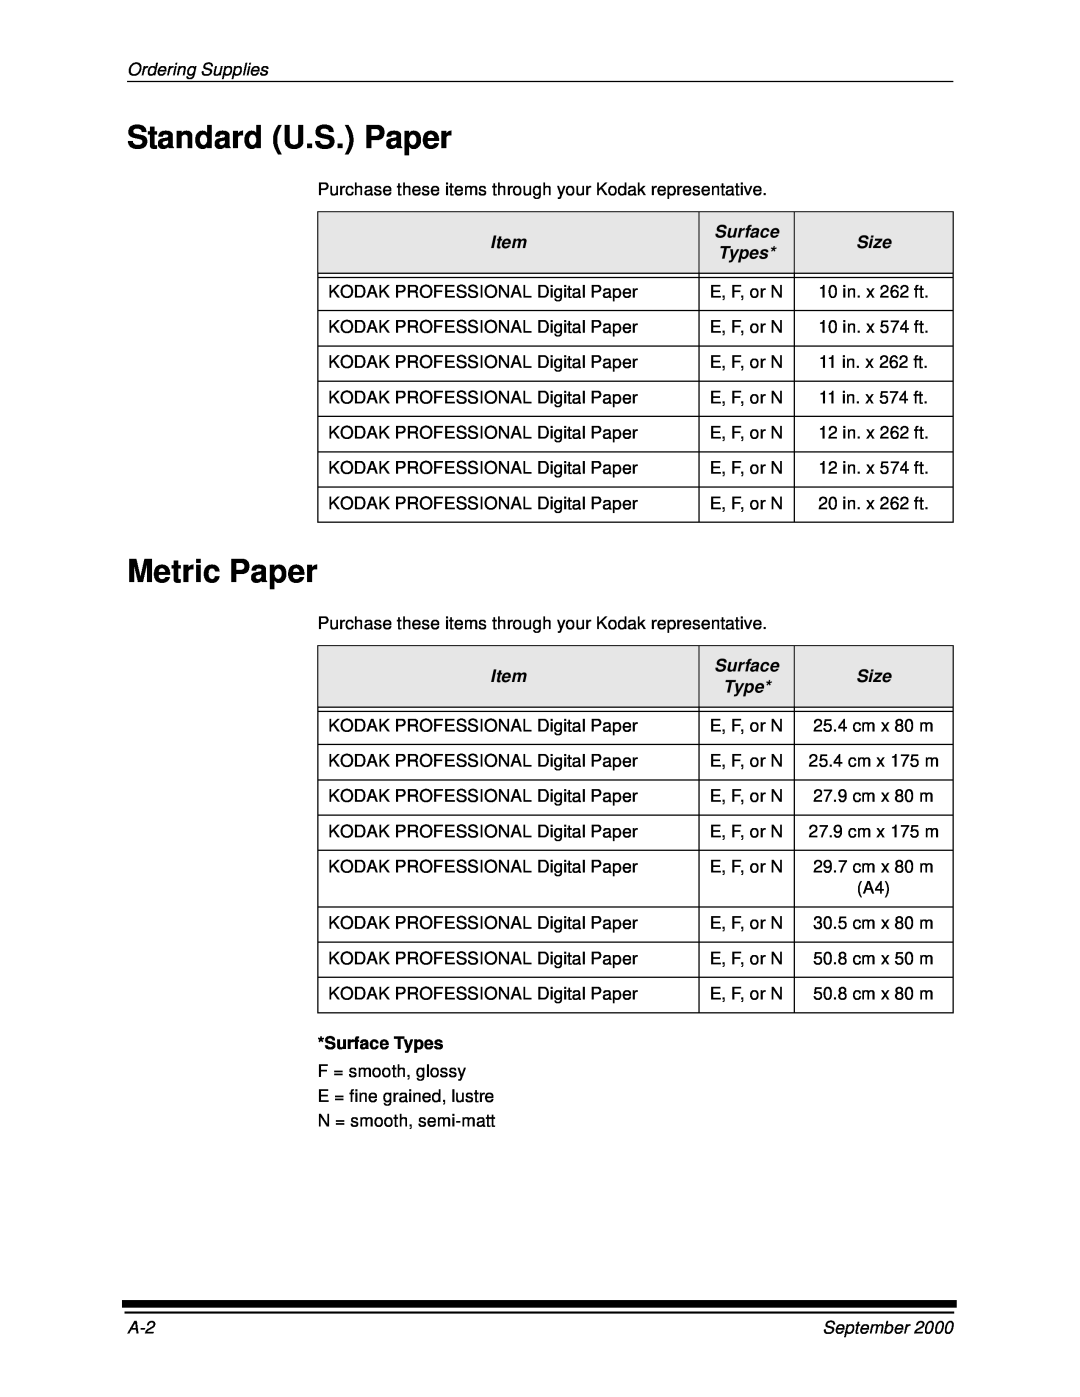 Kodak 20P manual Standard U.S. Paper, Metric Paper, Ordering Supplies, Item, Size, Surface Types, September 